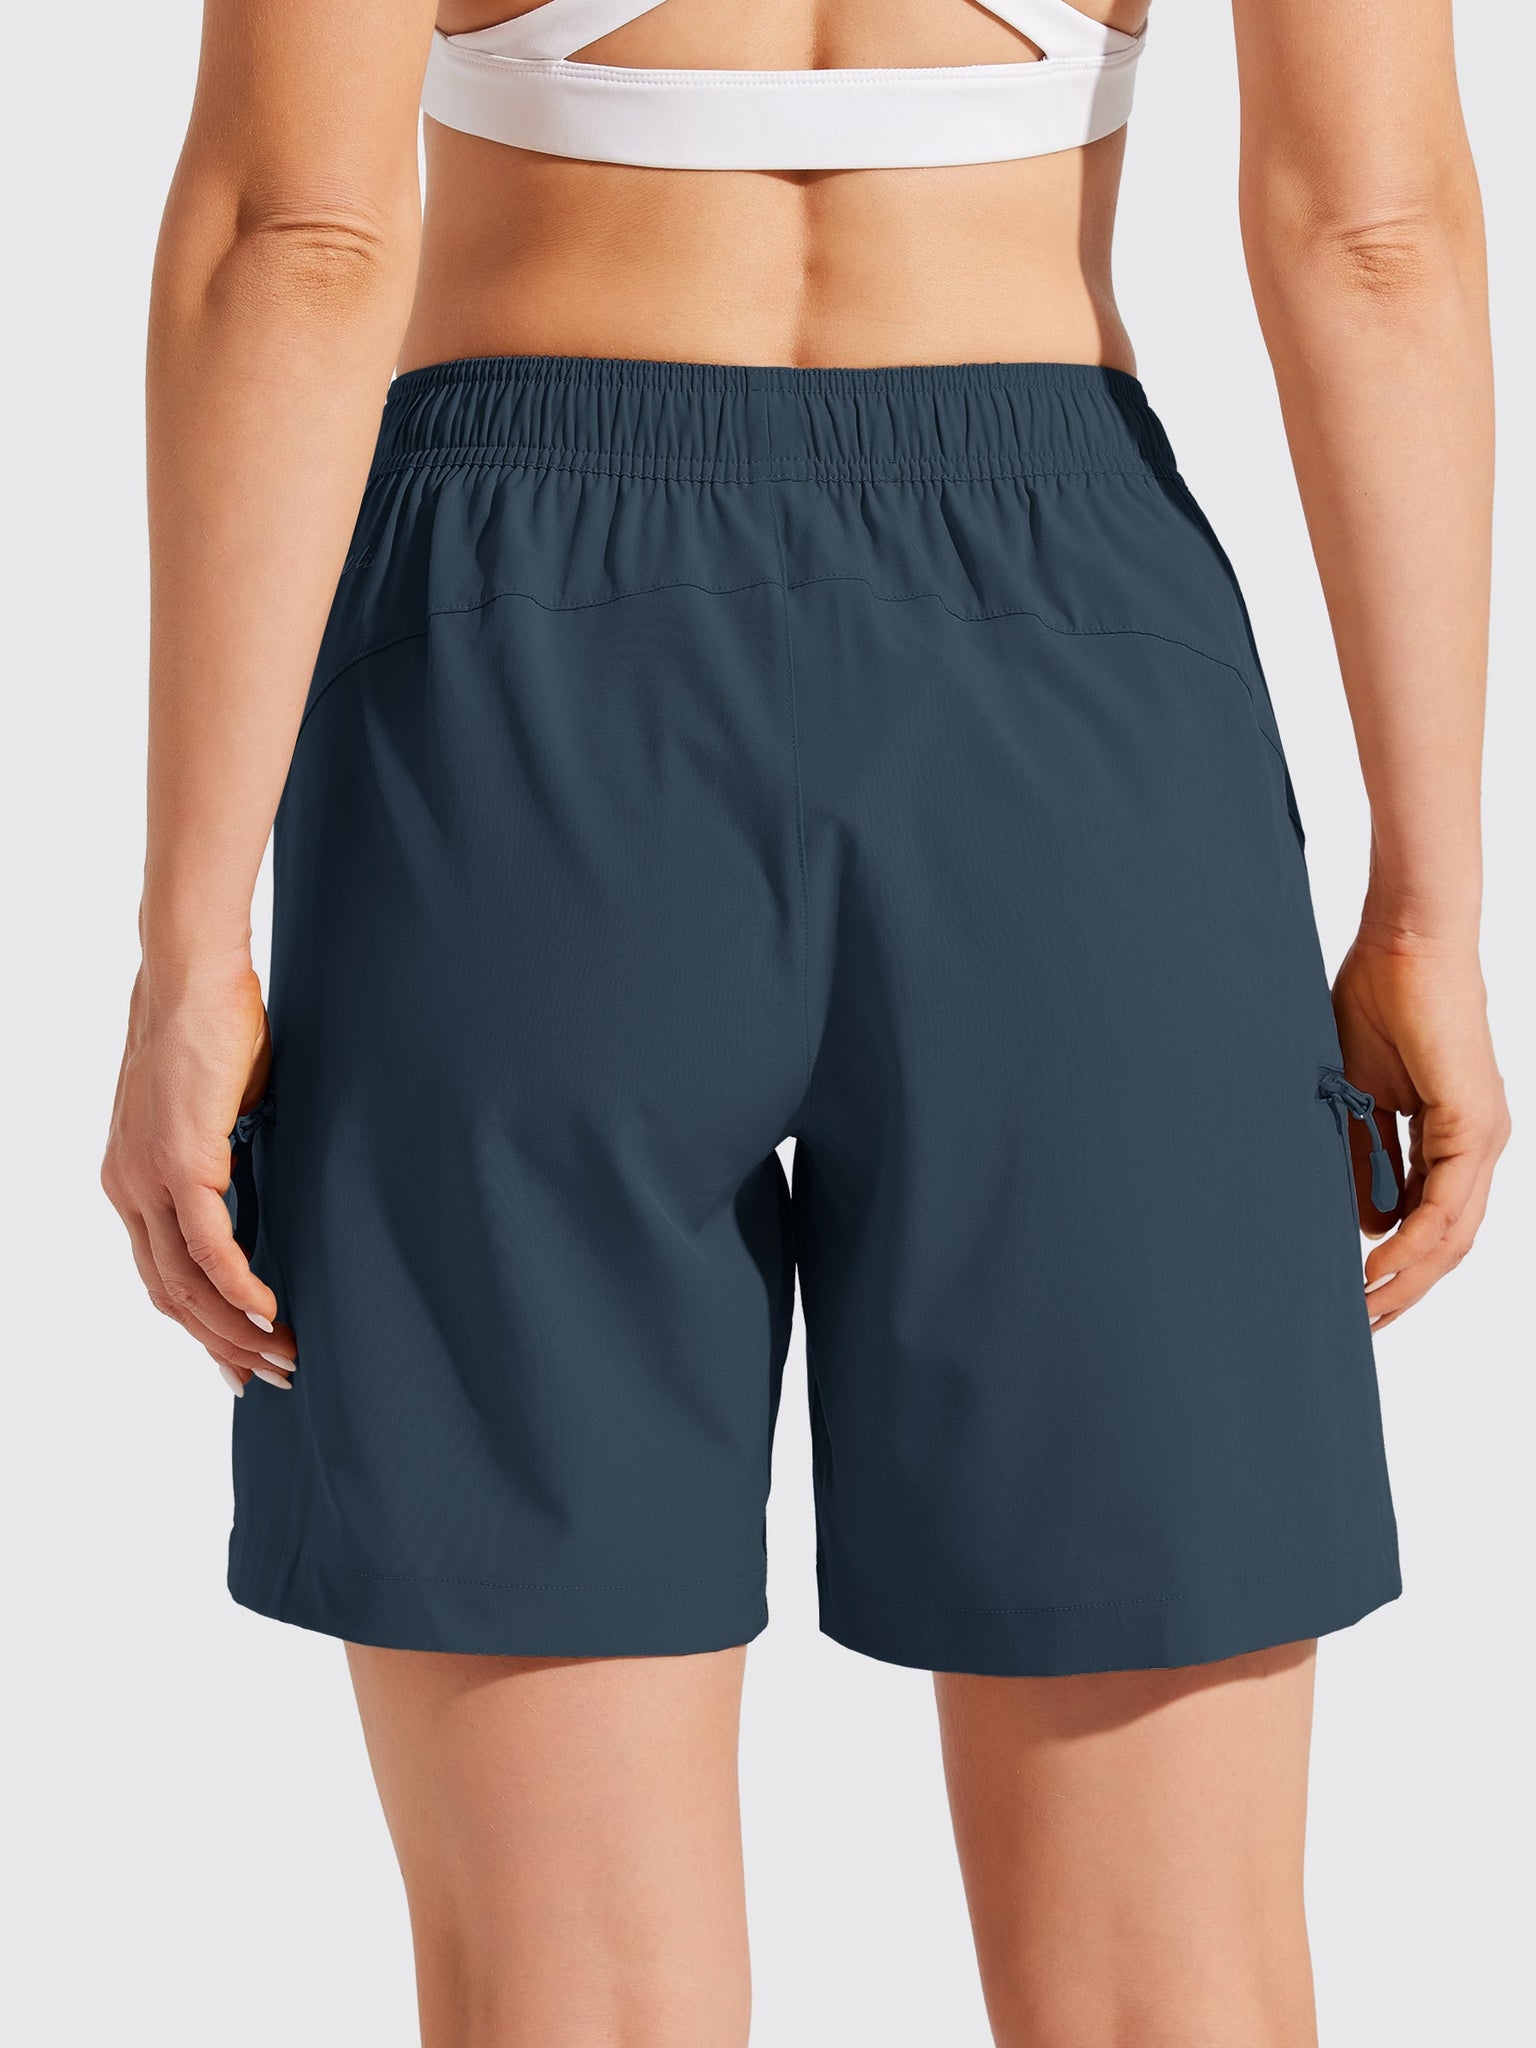 Women's Hiking Athletic Shorts_Navy3